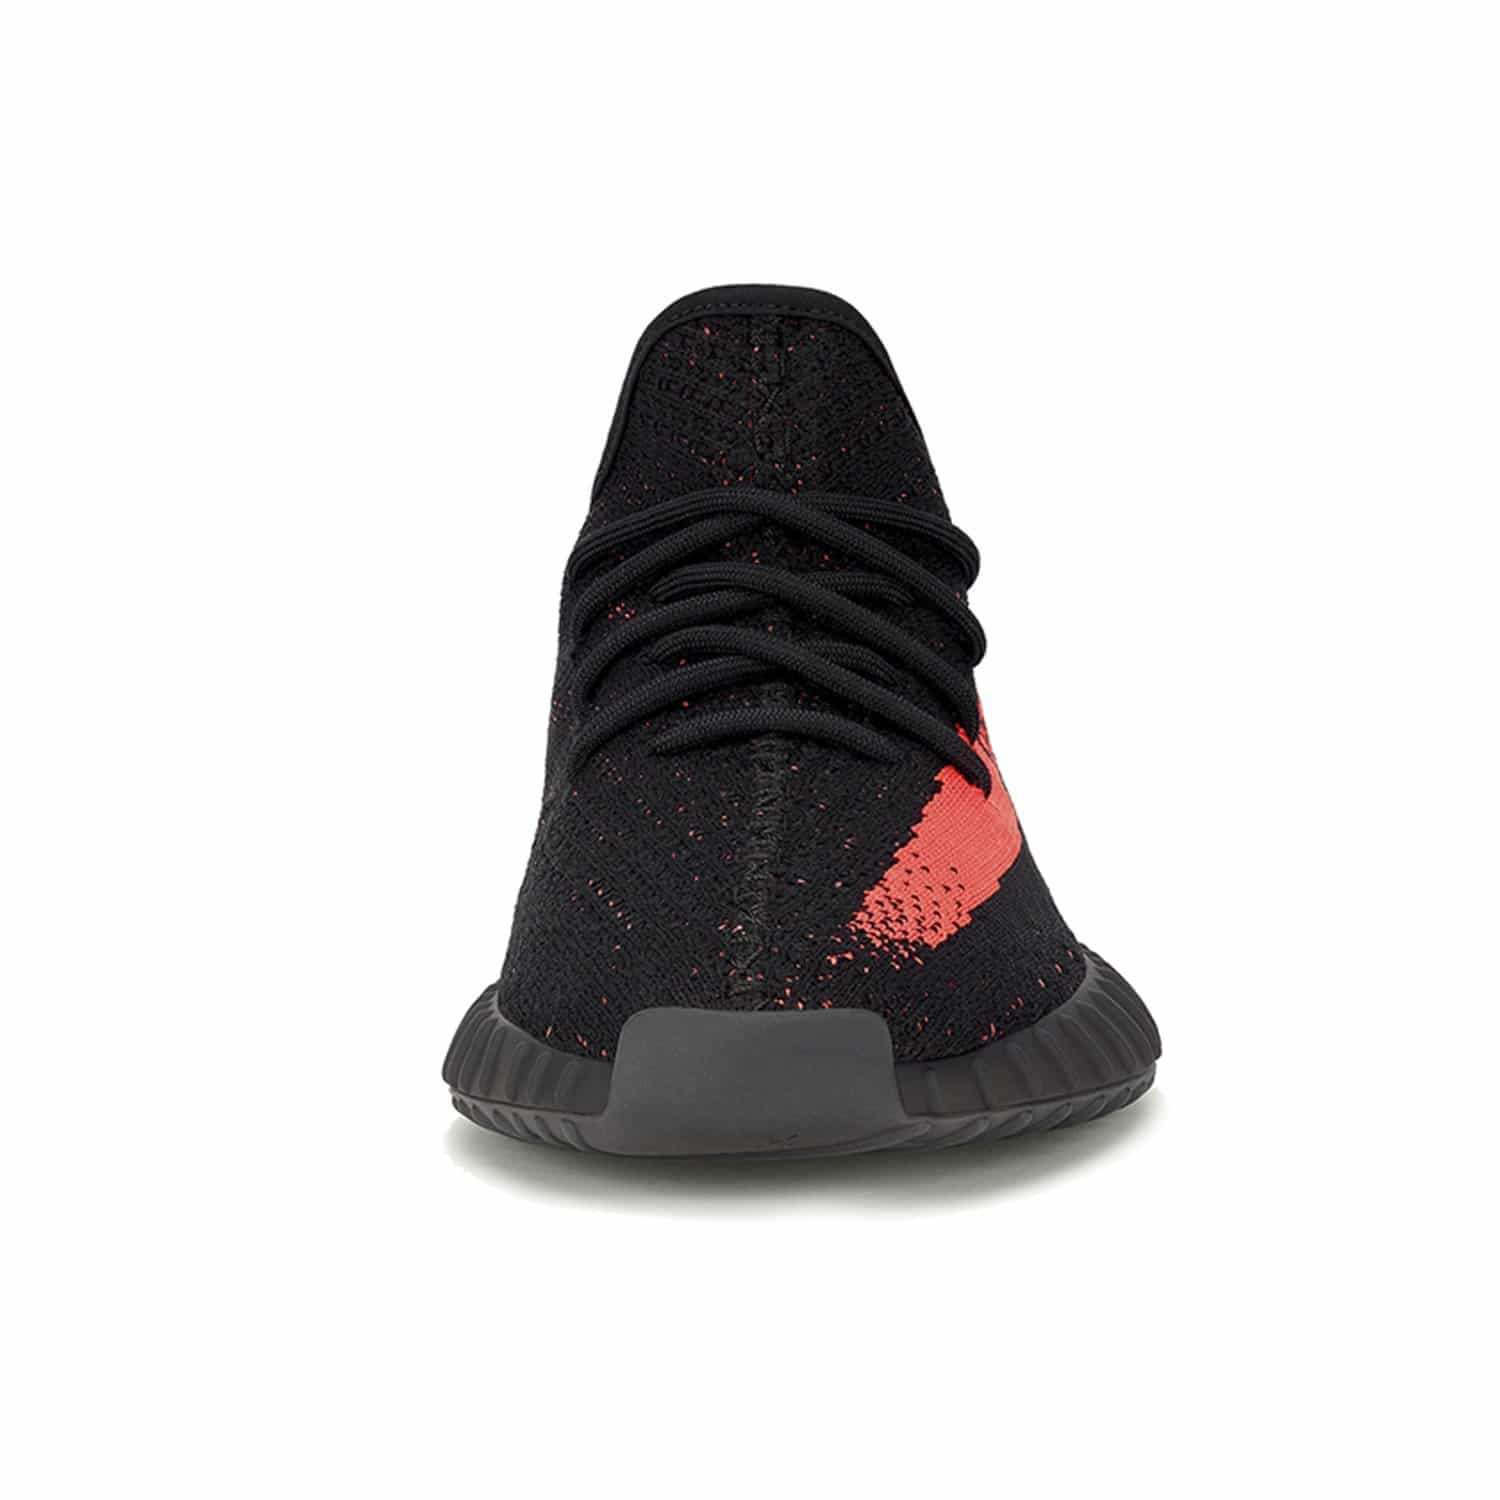 Yeezy 350 v2 CORE BLACK RED - ibuysneakers